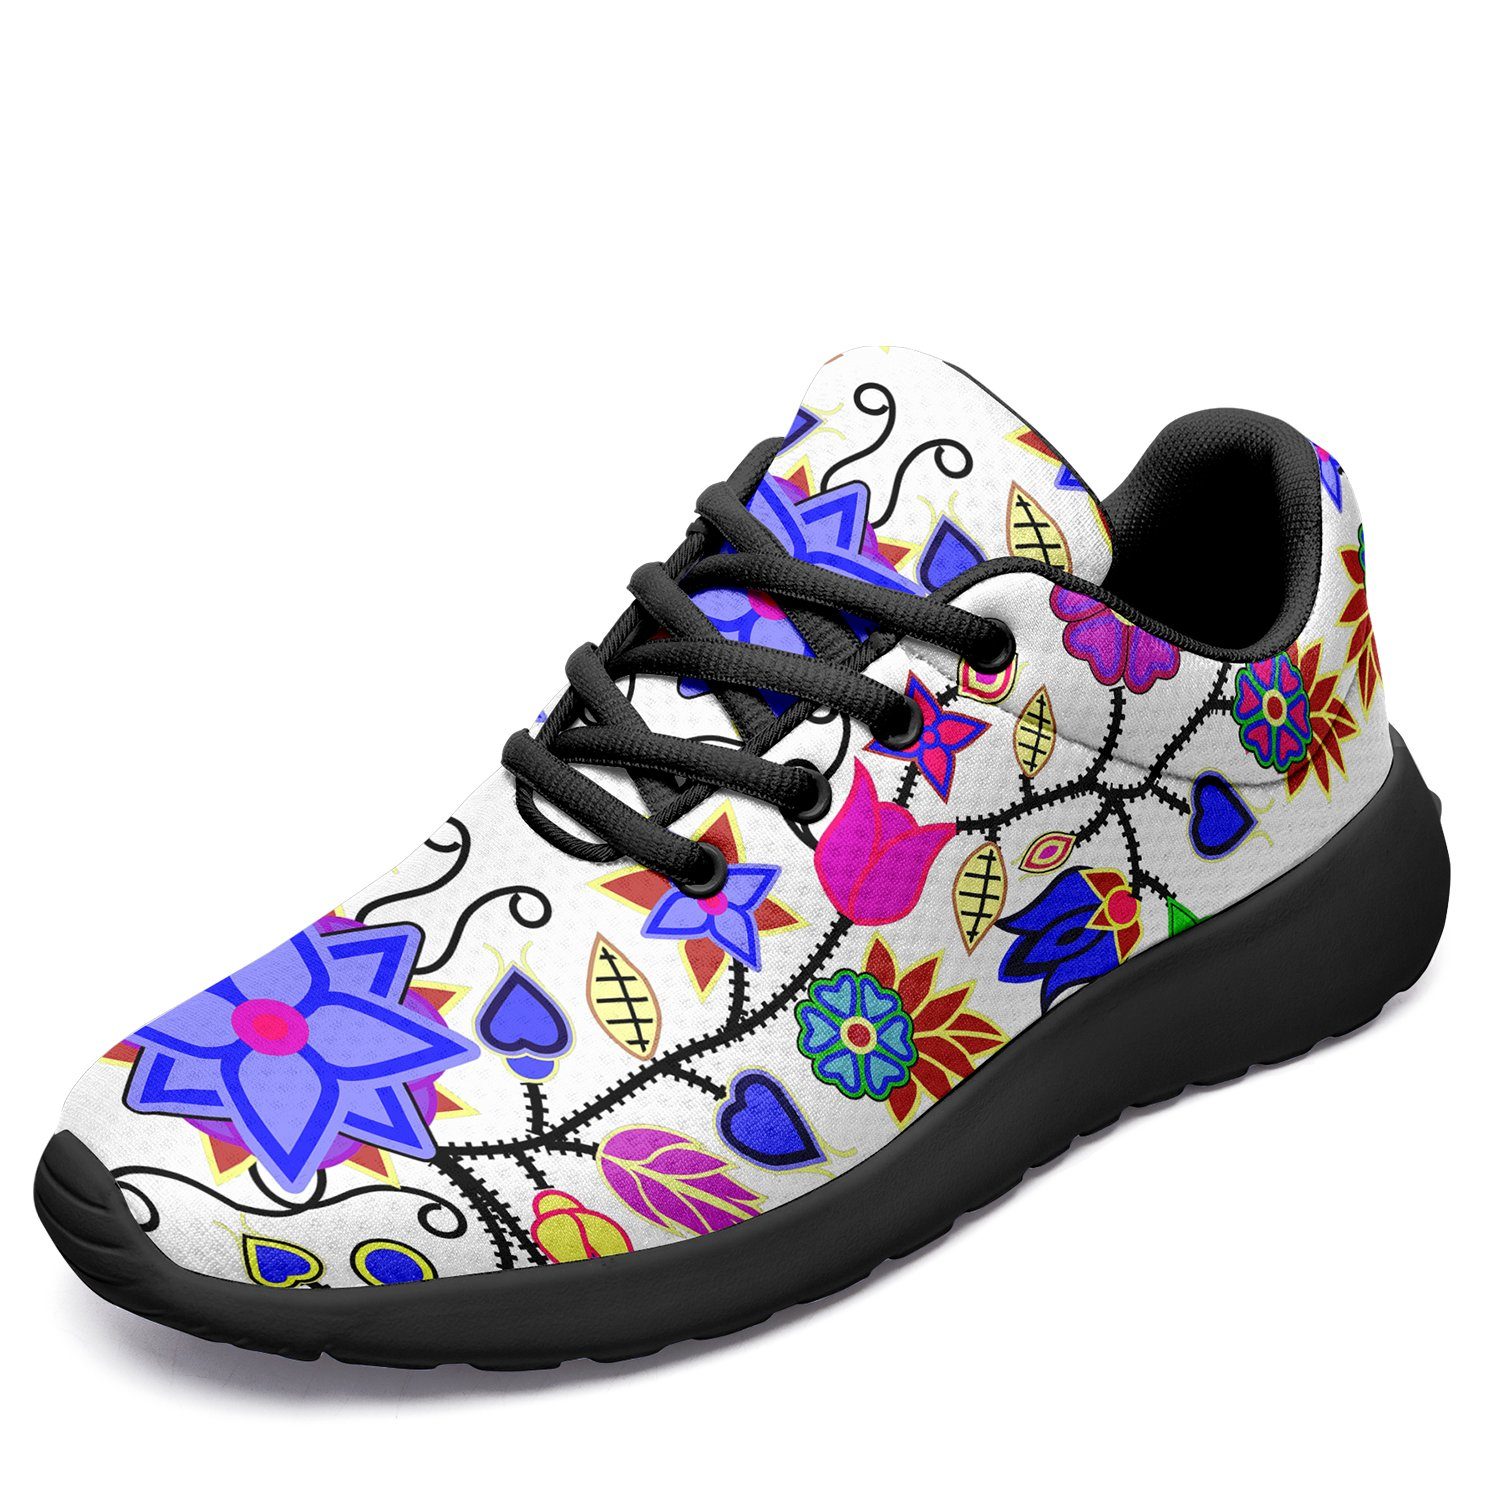 Floral Beadwork Seven Clans White Ikkaayi Sport Sneakers 49 Dzine US Women 4.5 / US Youth 3.5 / EUR 35 Black Sole 